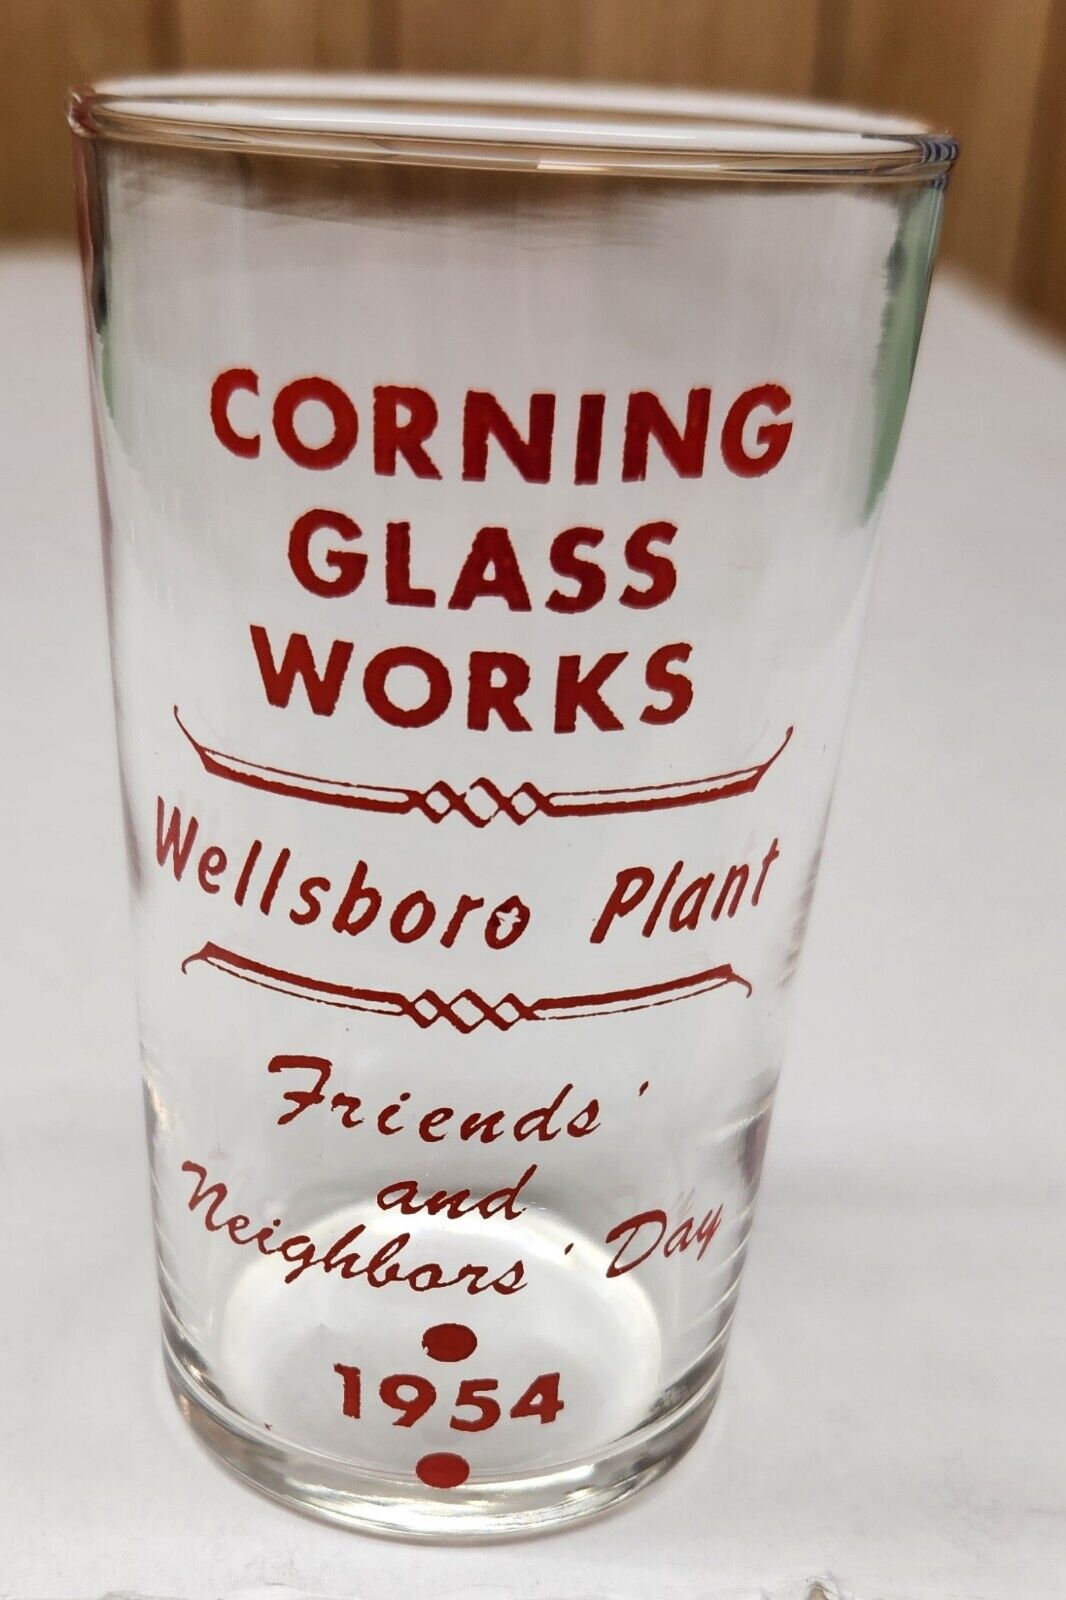 Corning Glass Works Wellsboro Plant Friends And Neighbors Day 1954 Glass Tumbler